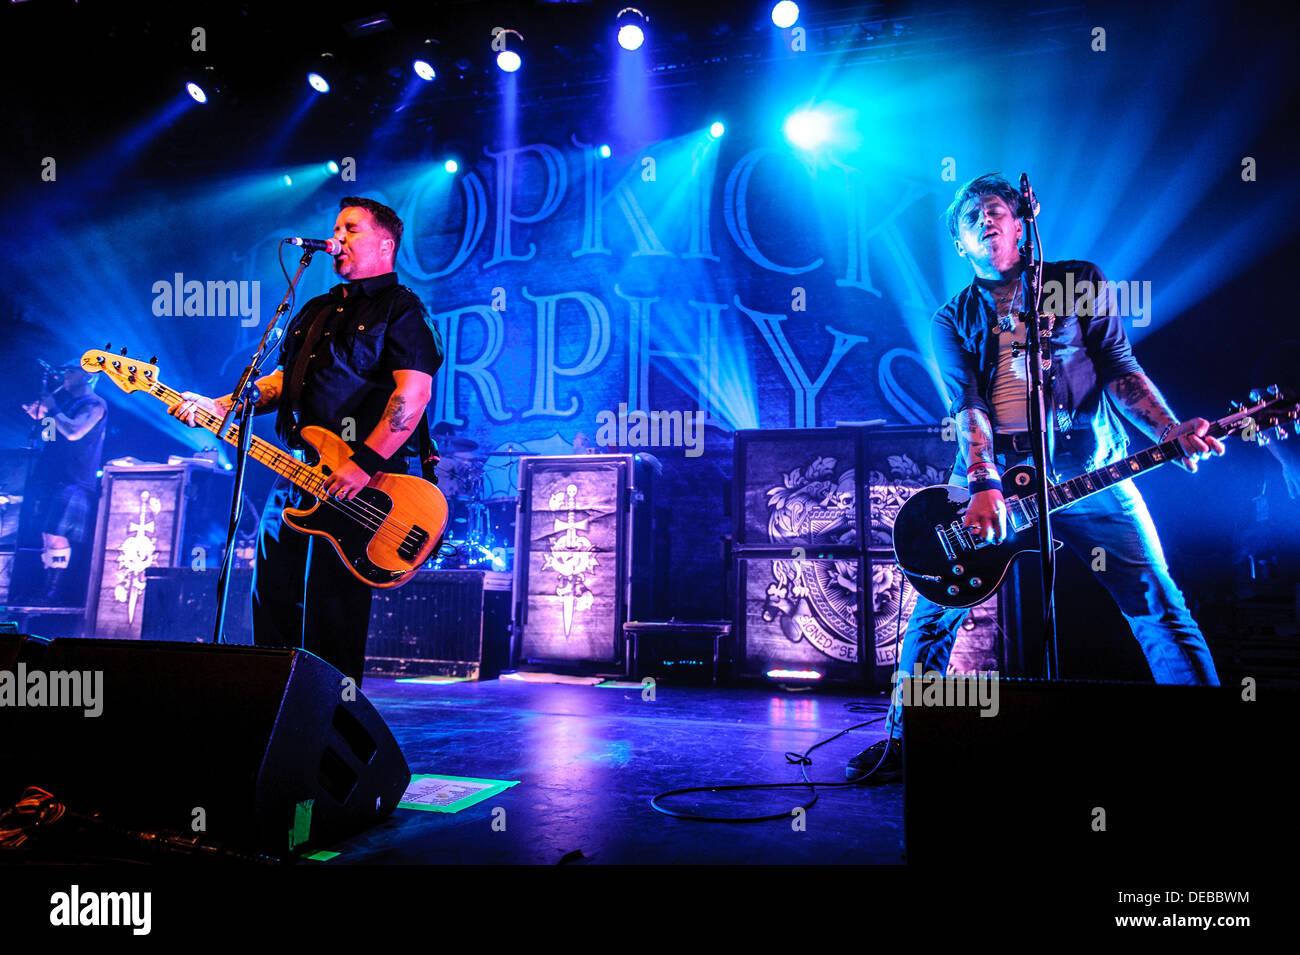 Toronto, Ontario, Canada. 15th Sep, 2013. Guitarists for American Celtic punk band 'Dropkick Murphys' JAMES LYNCH and KEN CASEY perfom on stage at Sound Academy in Toronto. © Igor Vidyashev/ZUMAPRESS.com/Alamy Live News Stock Photo